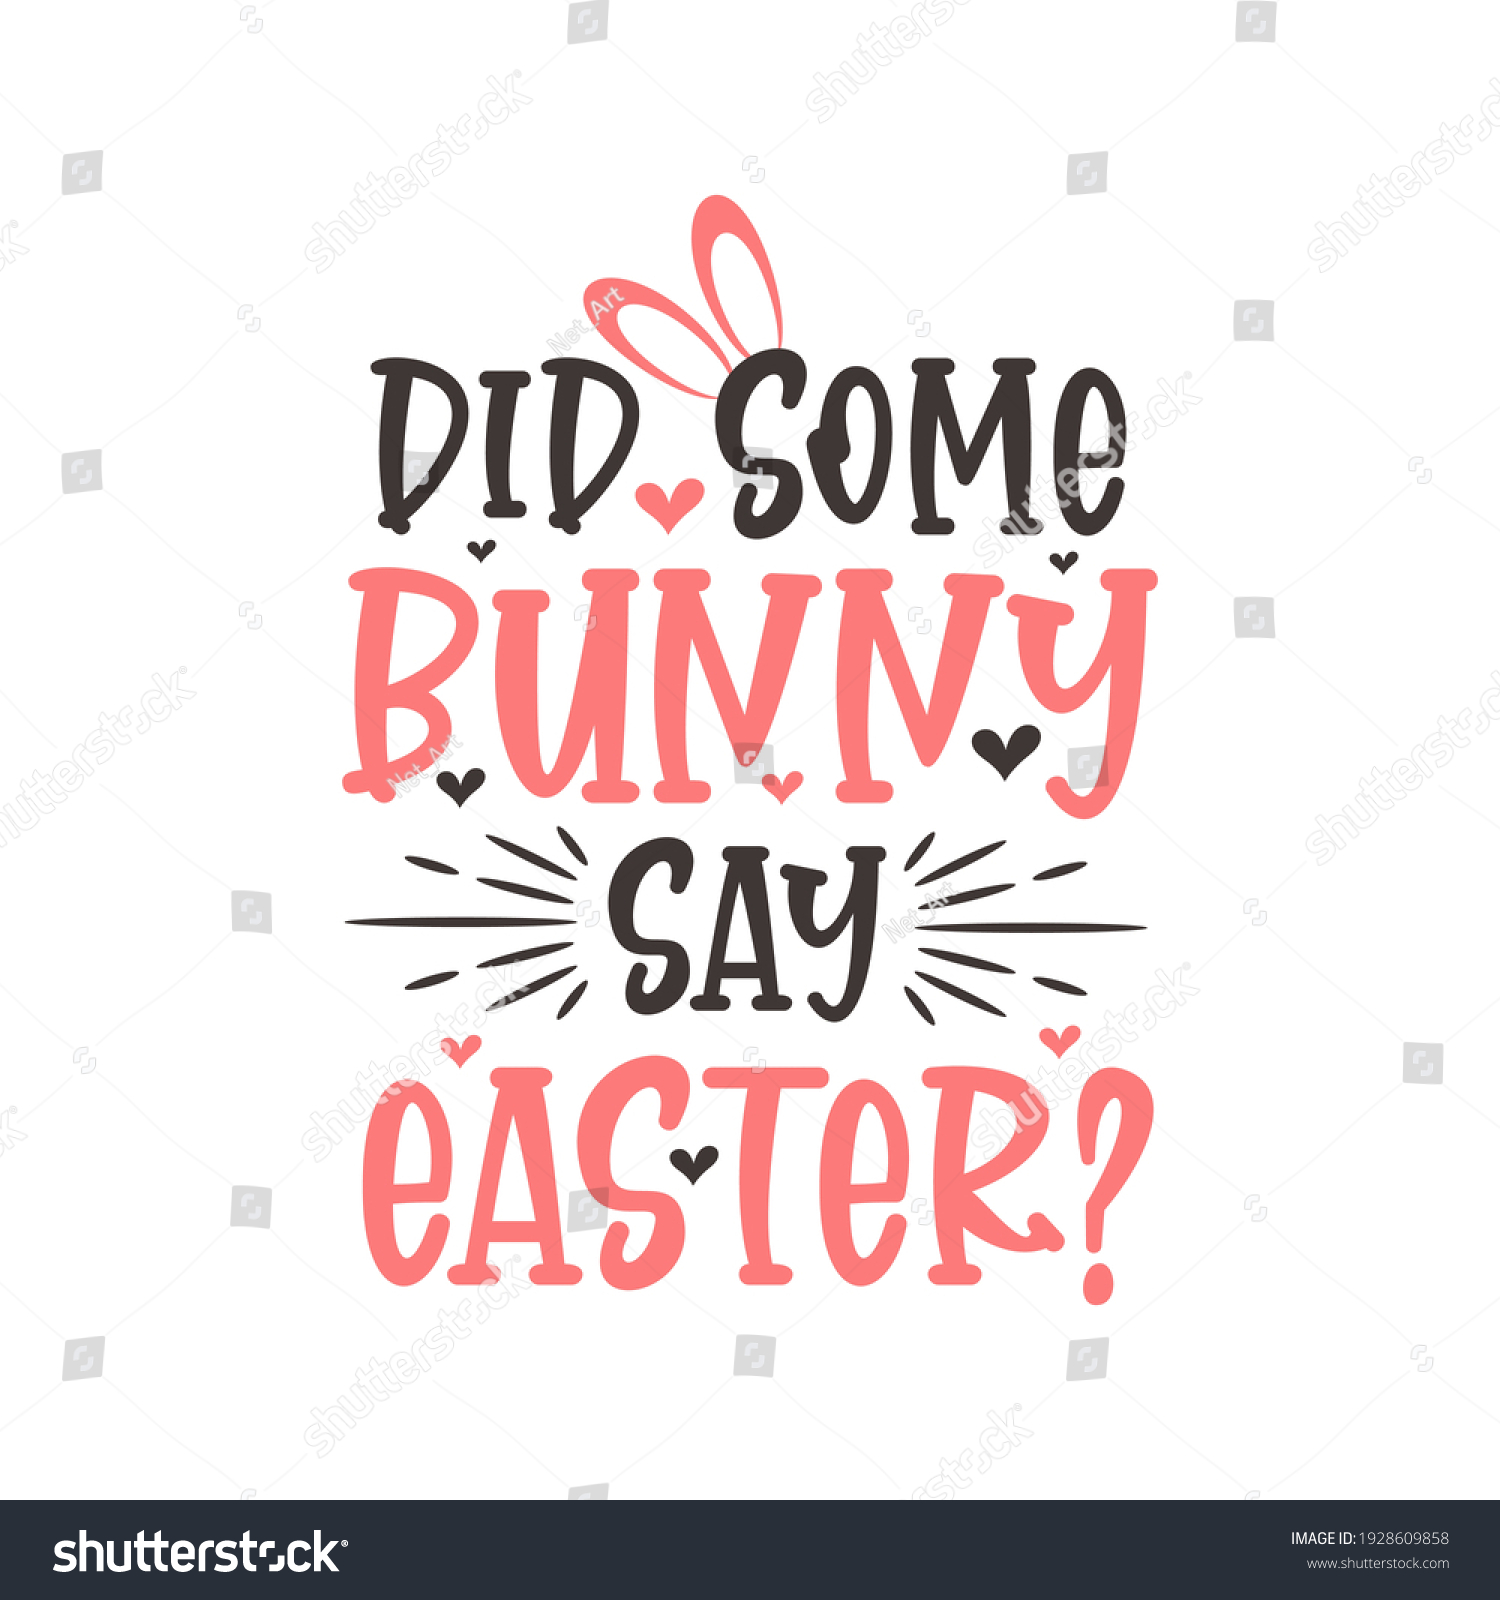 SVG of Did some bunny say easter? Easter funny design svg